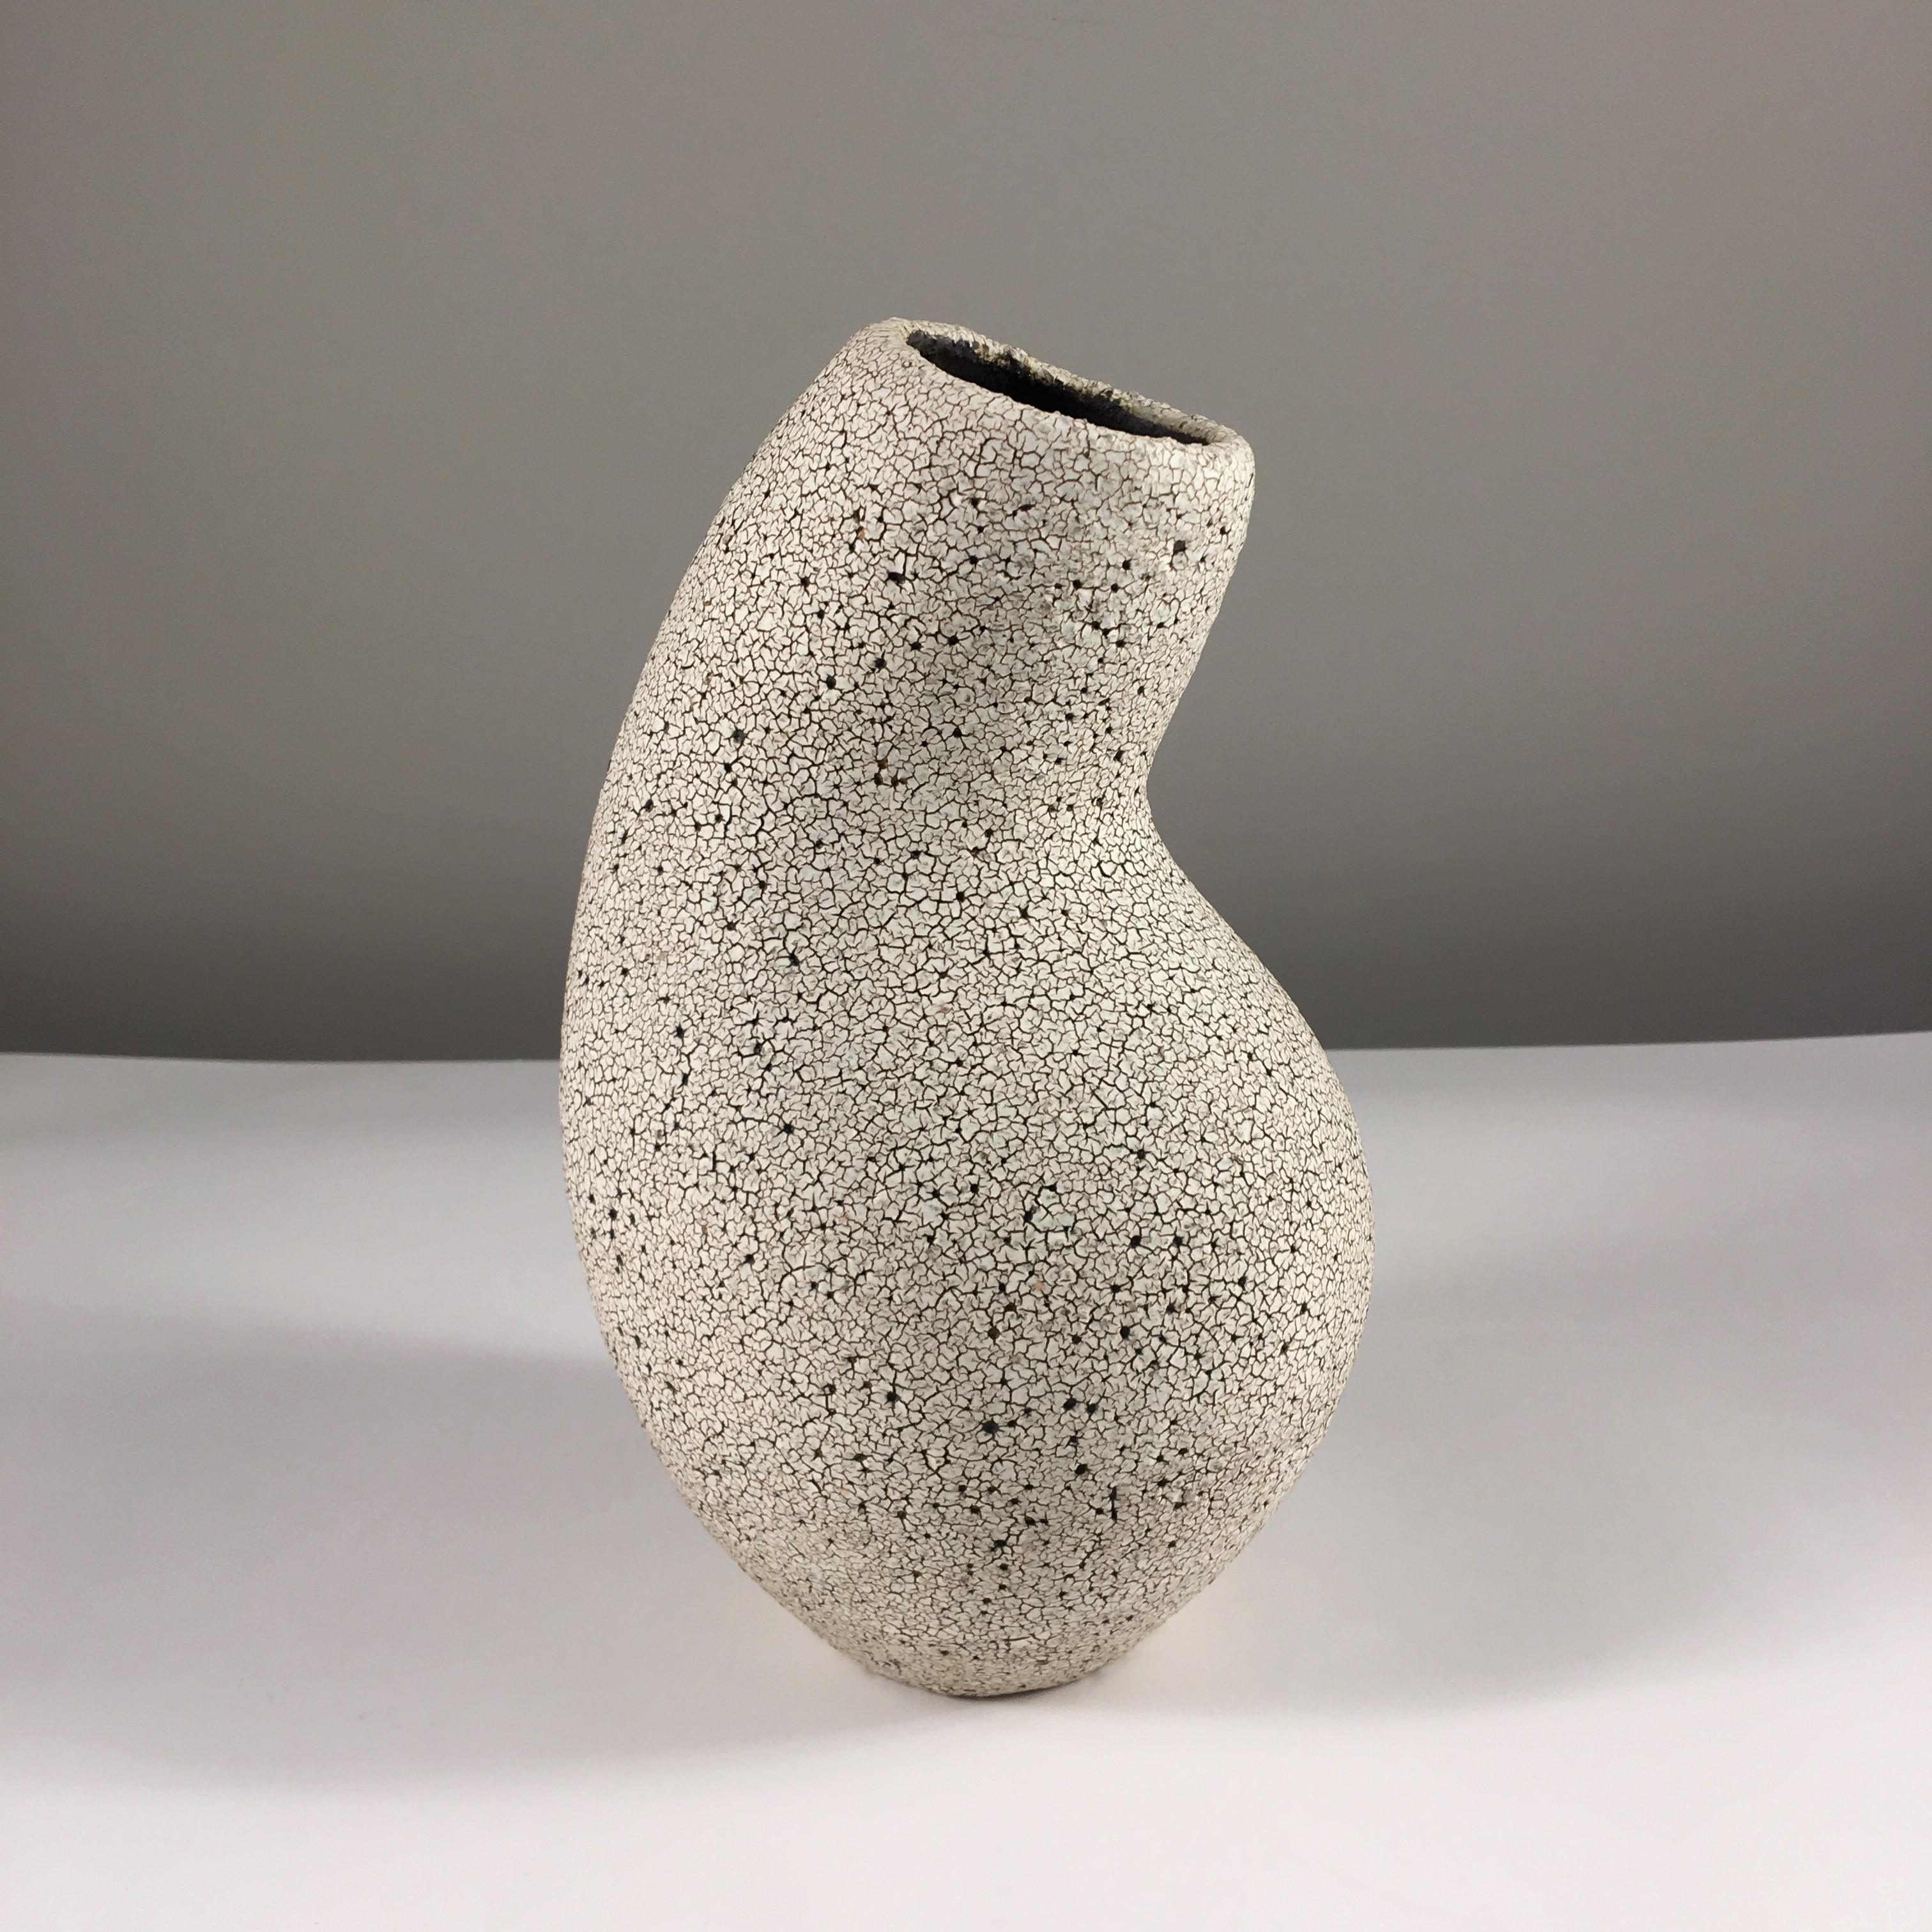 ceramic pieces with texture